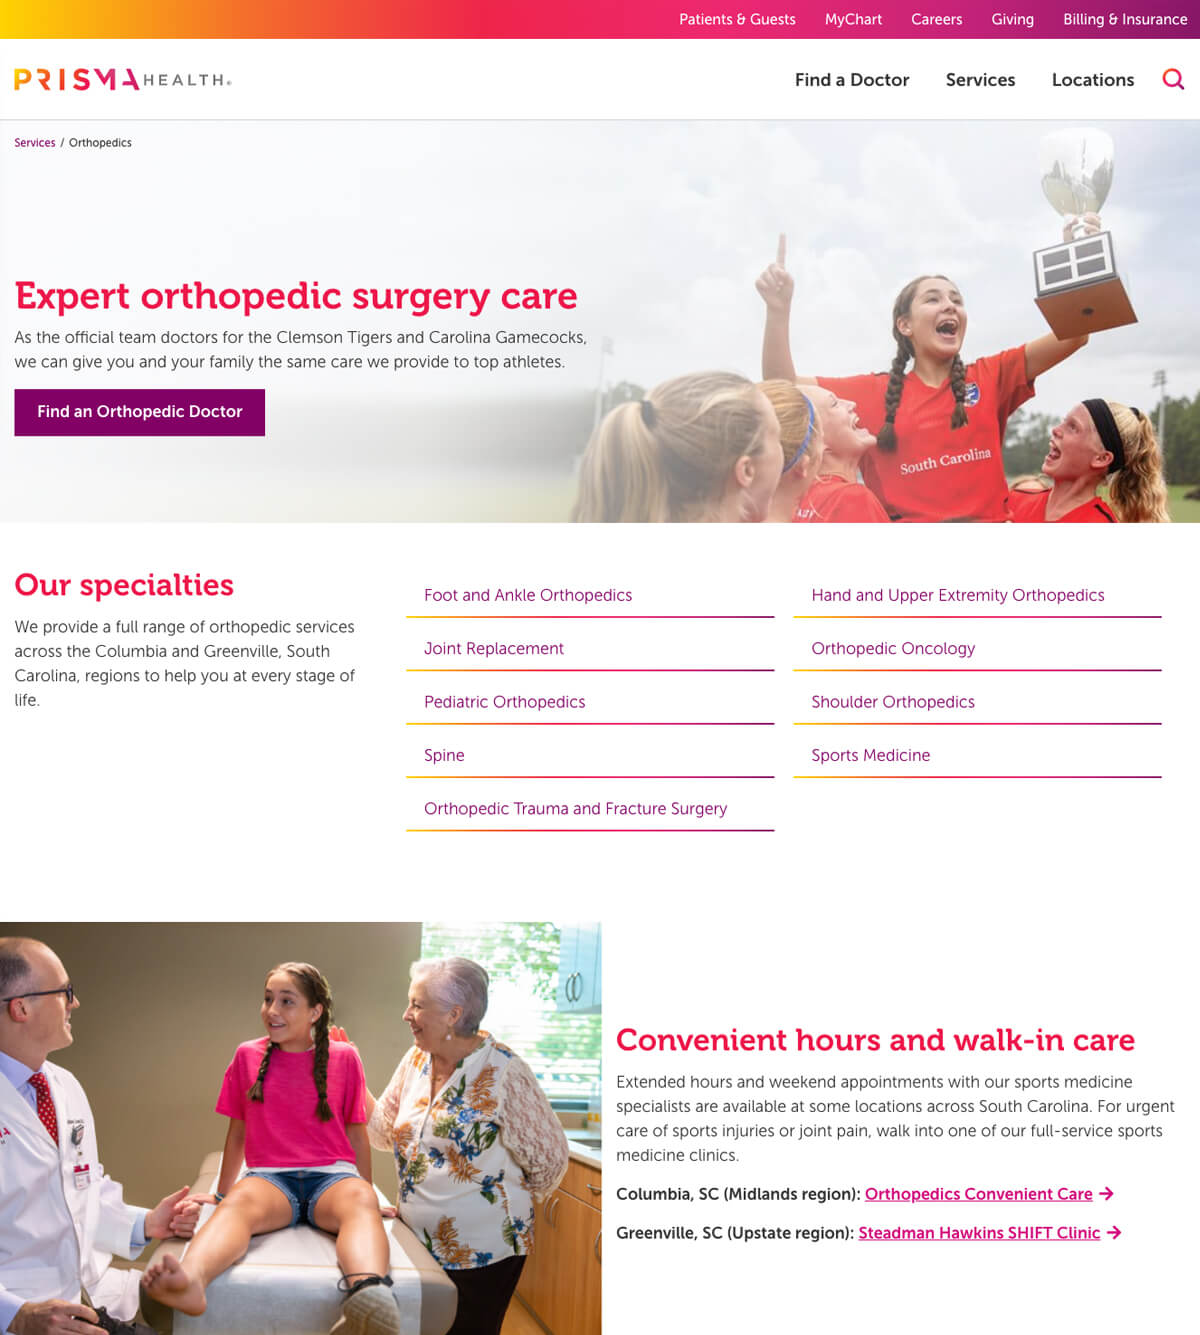 Prisma Health's service webpage